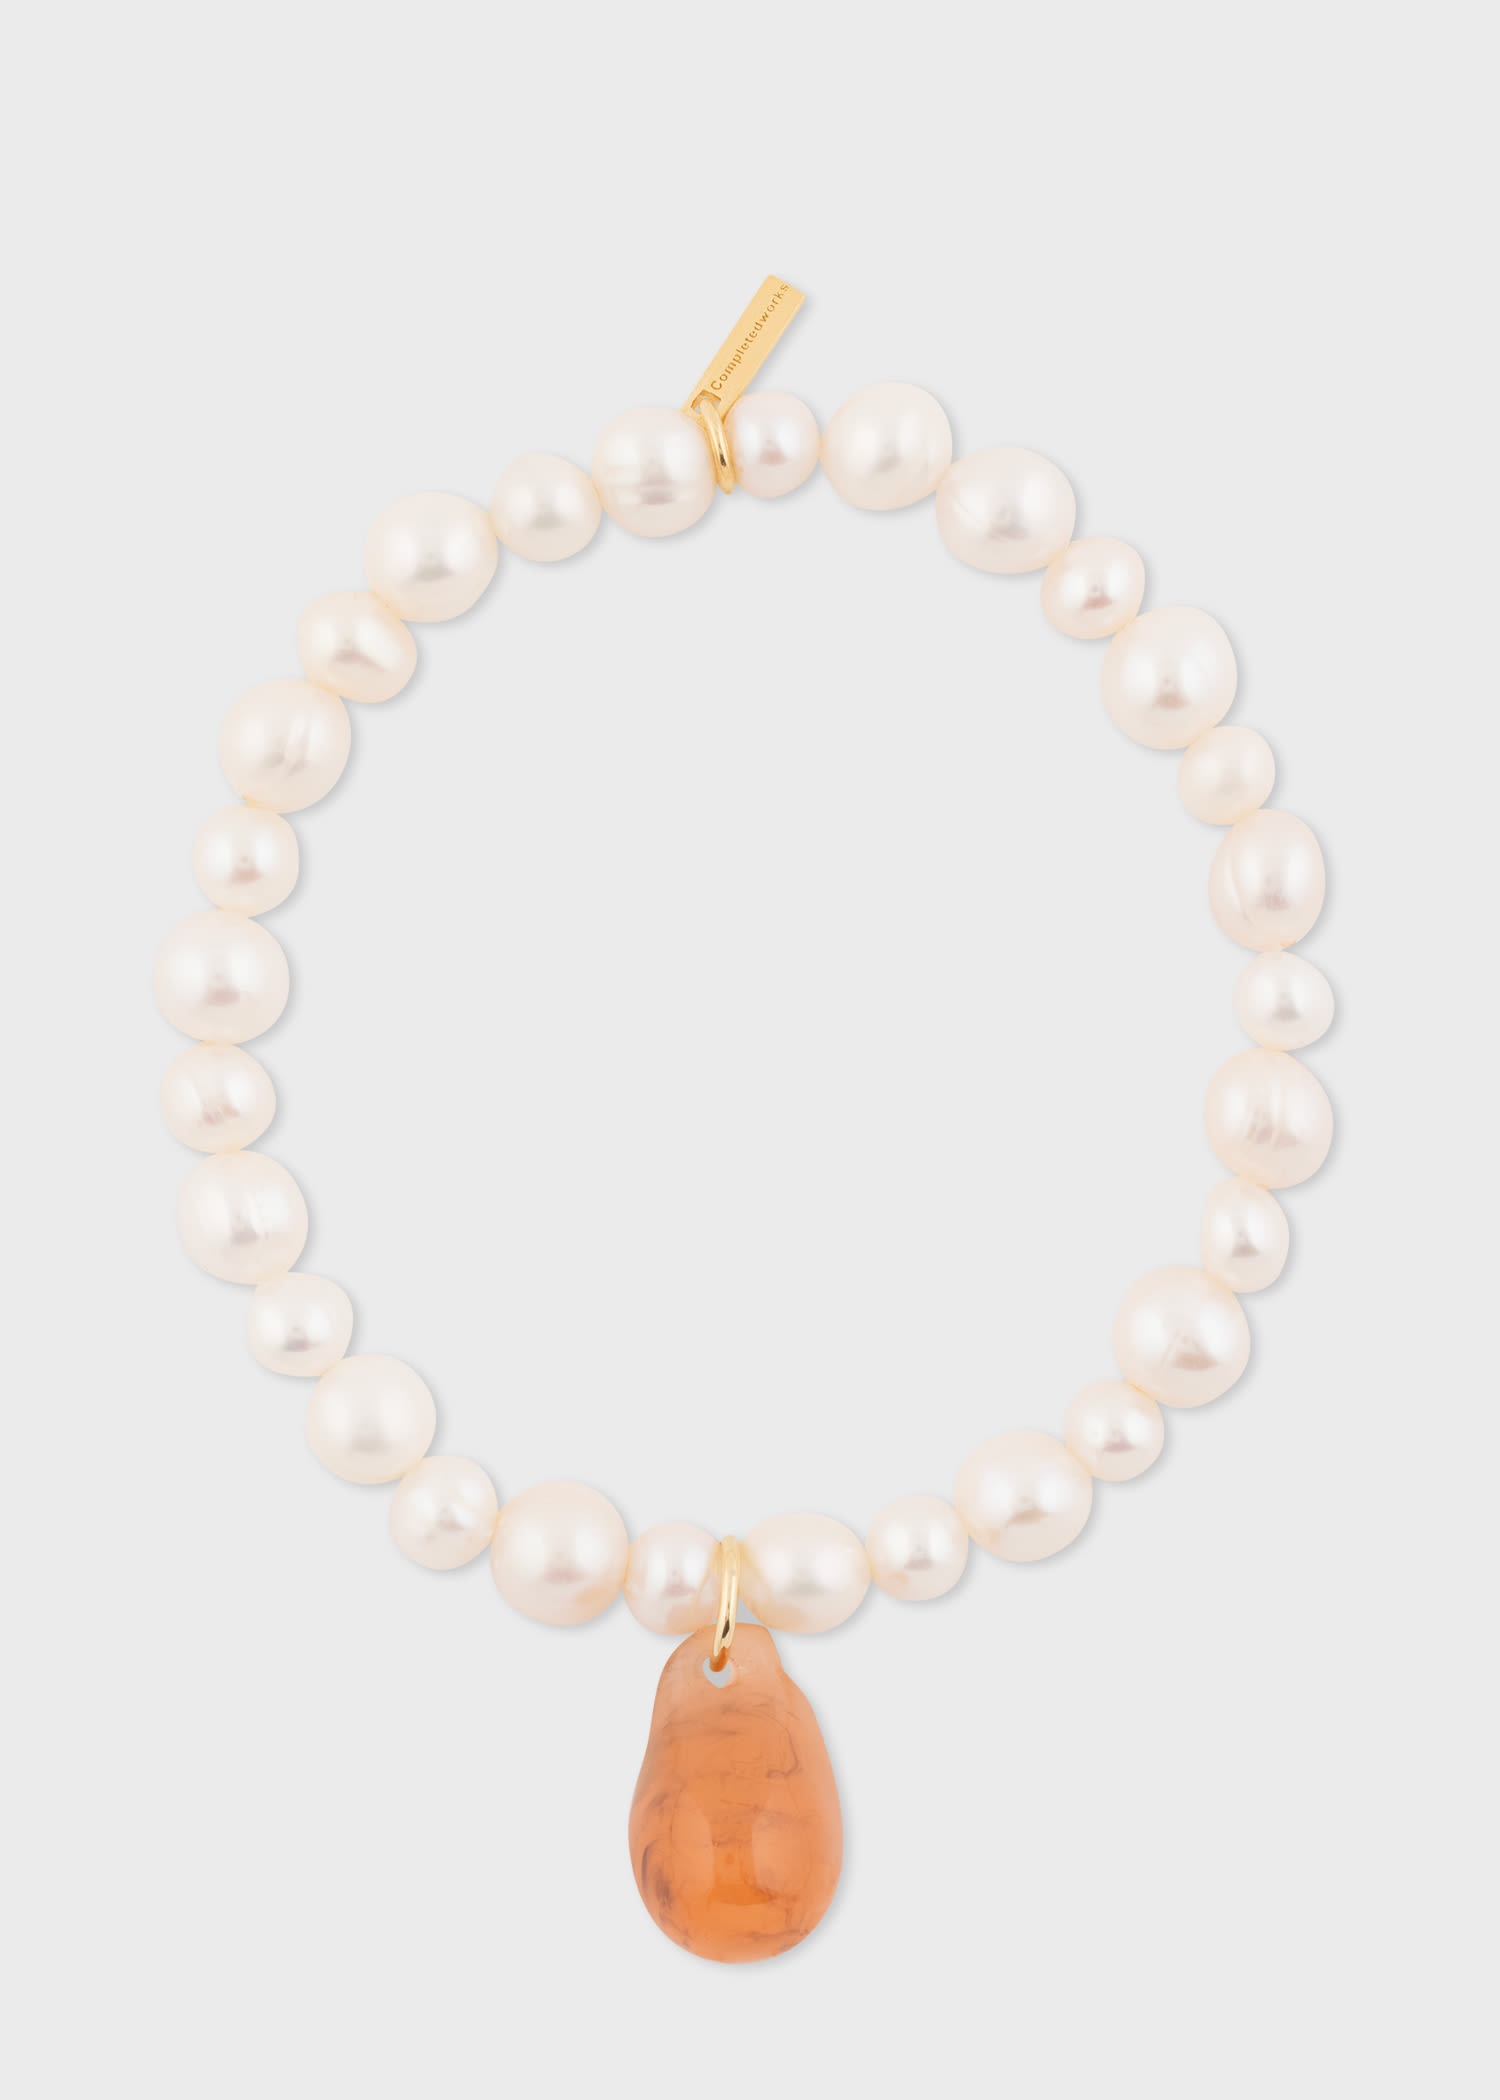 Pearl & Bio Resin Bracelet by Completedworks - 1